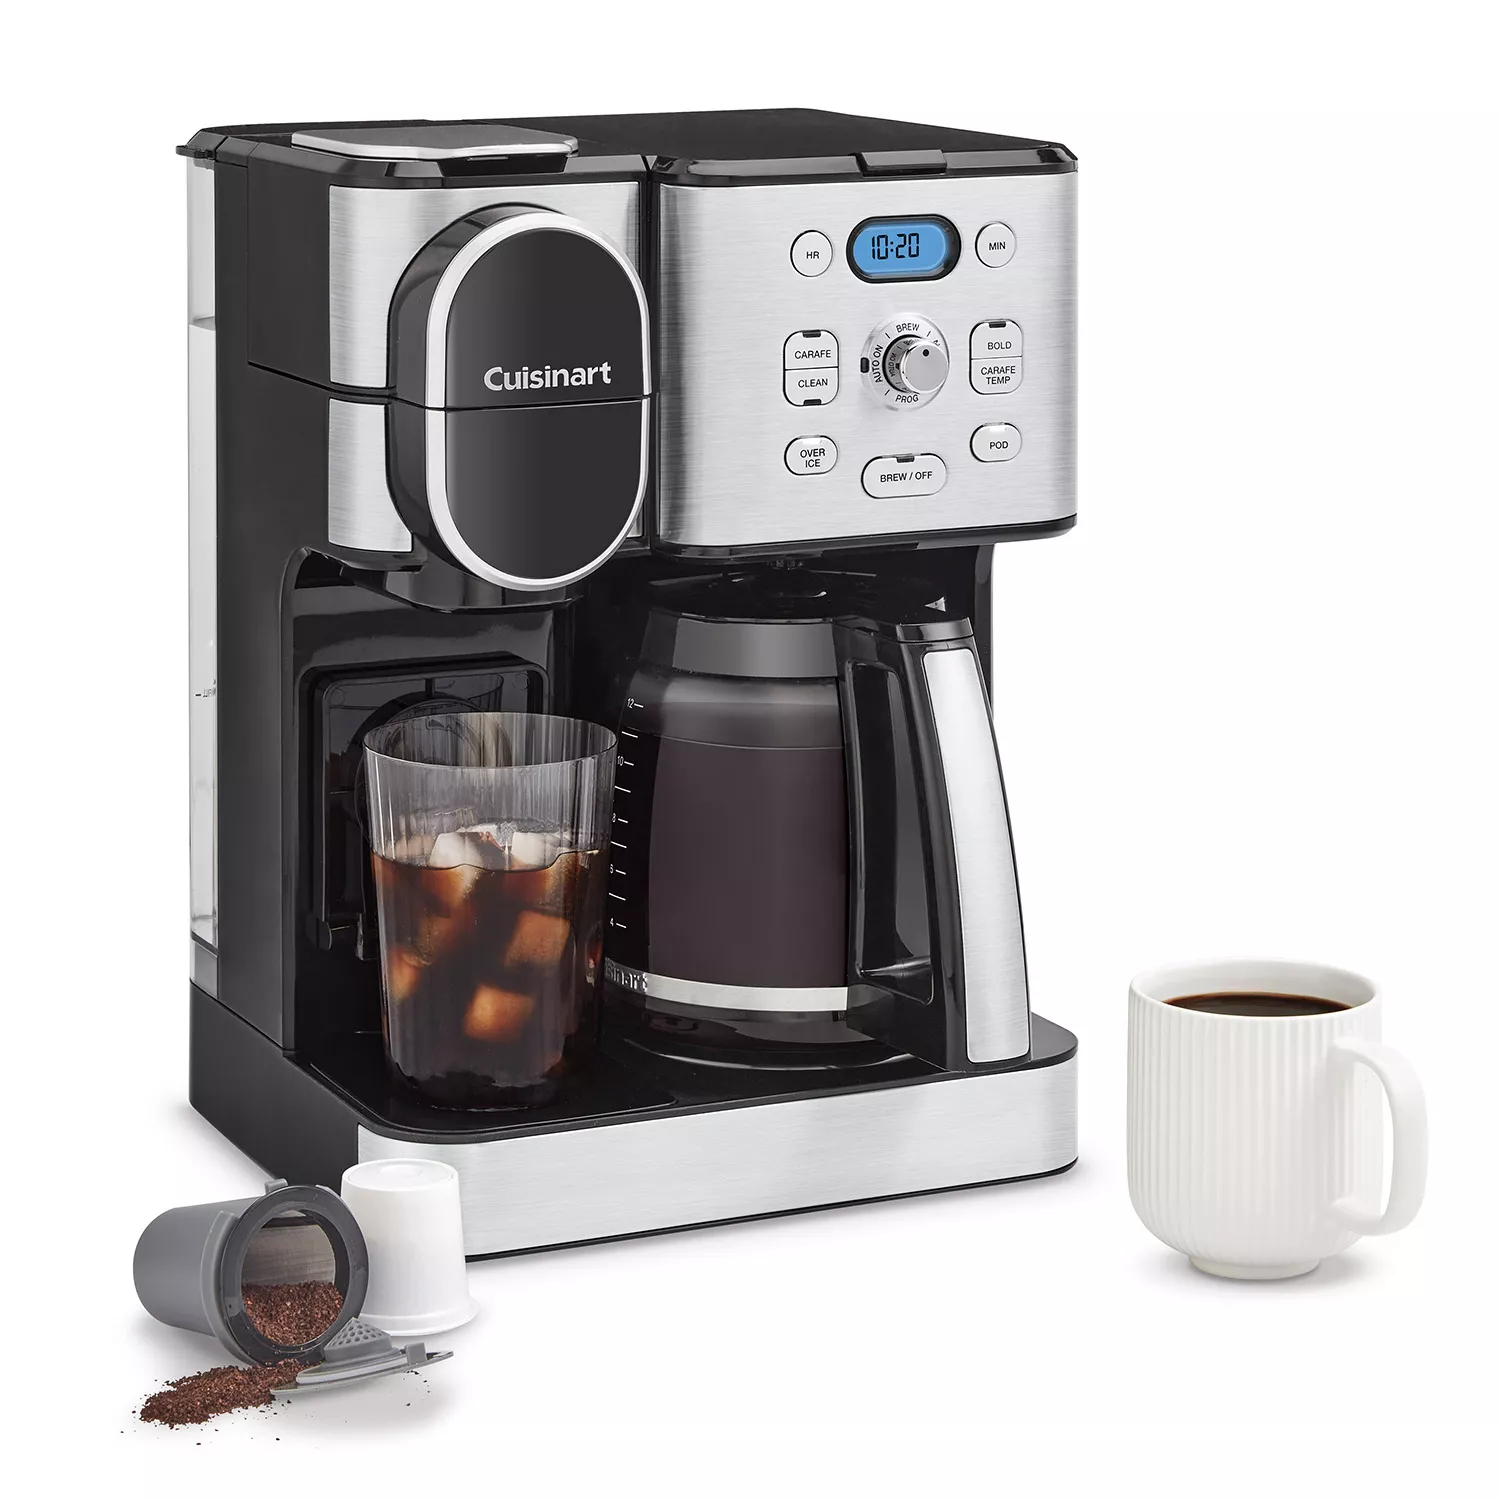 Instant Pod deal: Save 33% on Instant Brands' coffee/espresso machine